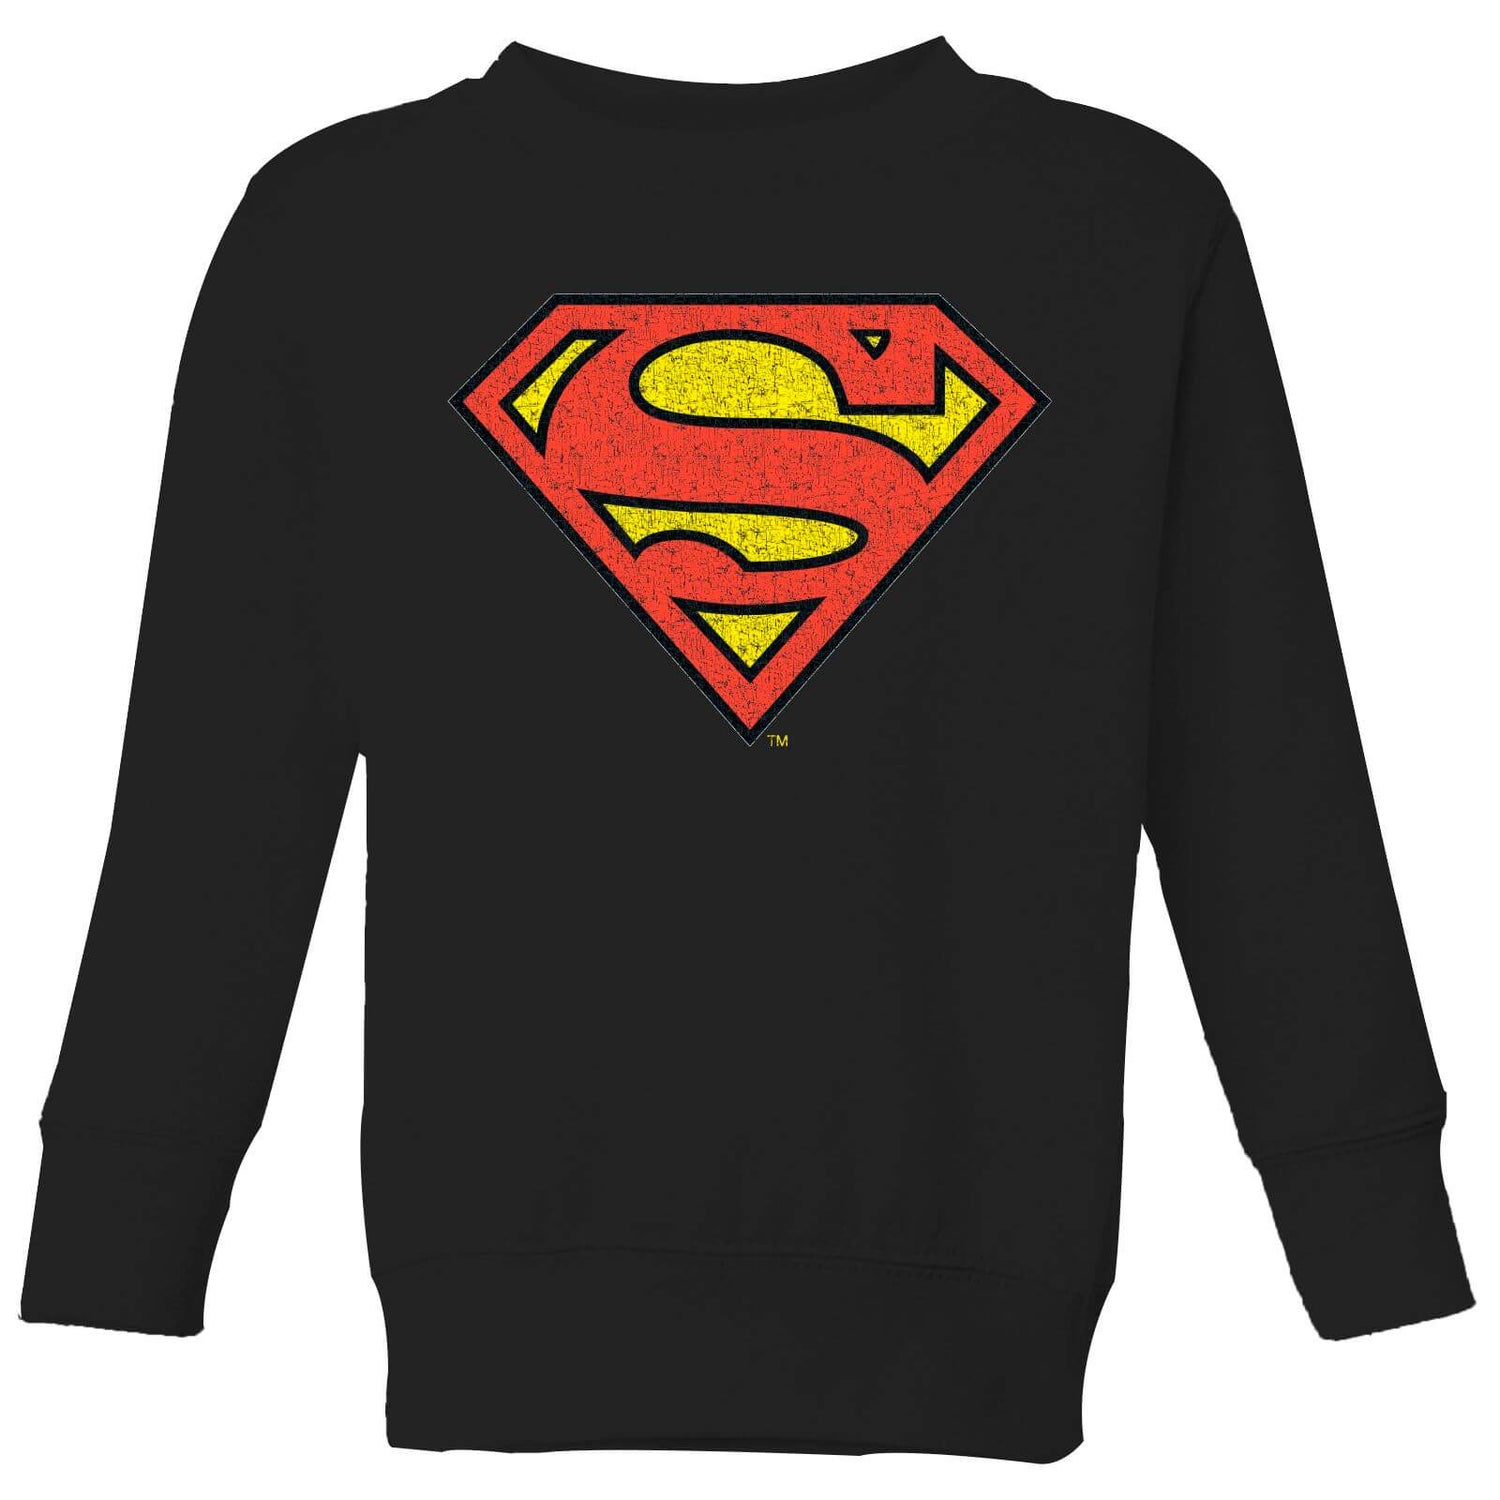 Official Superman Crackle Logo Kids' Sweatshirt - Black